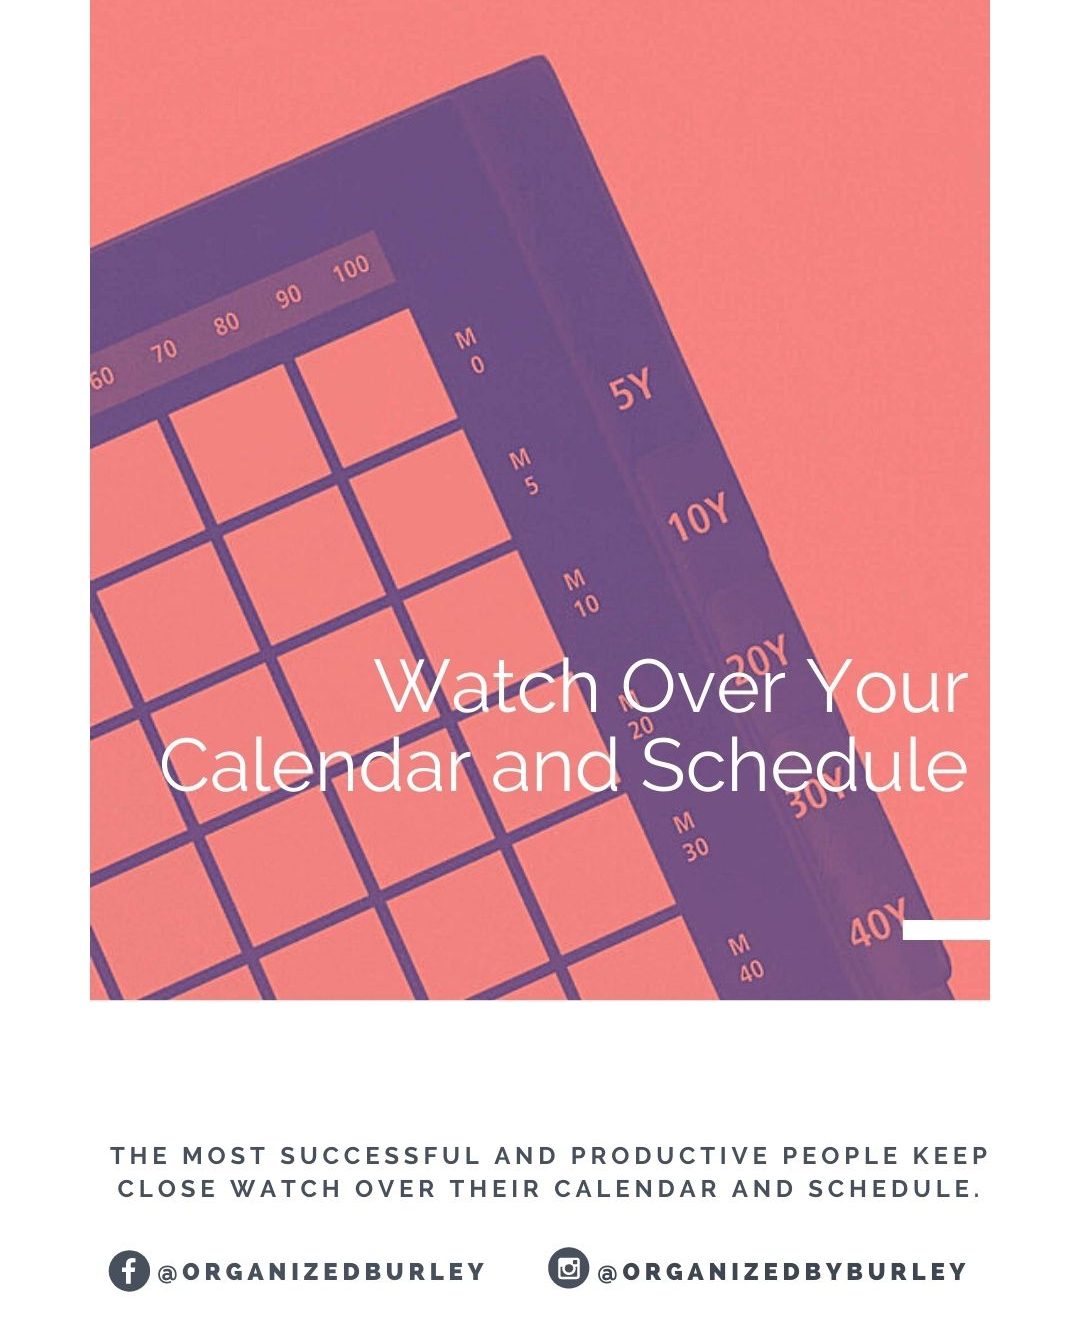 How to organize your calendar